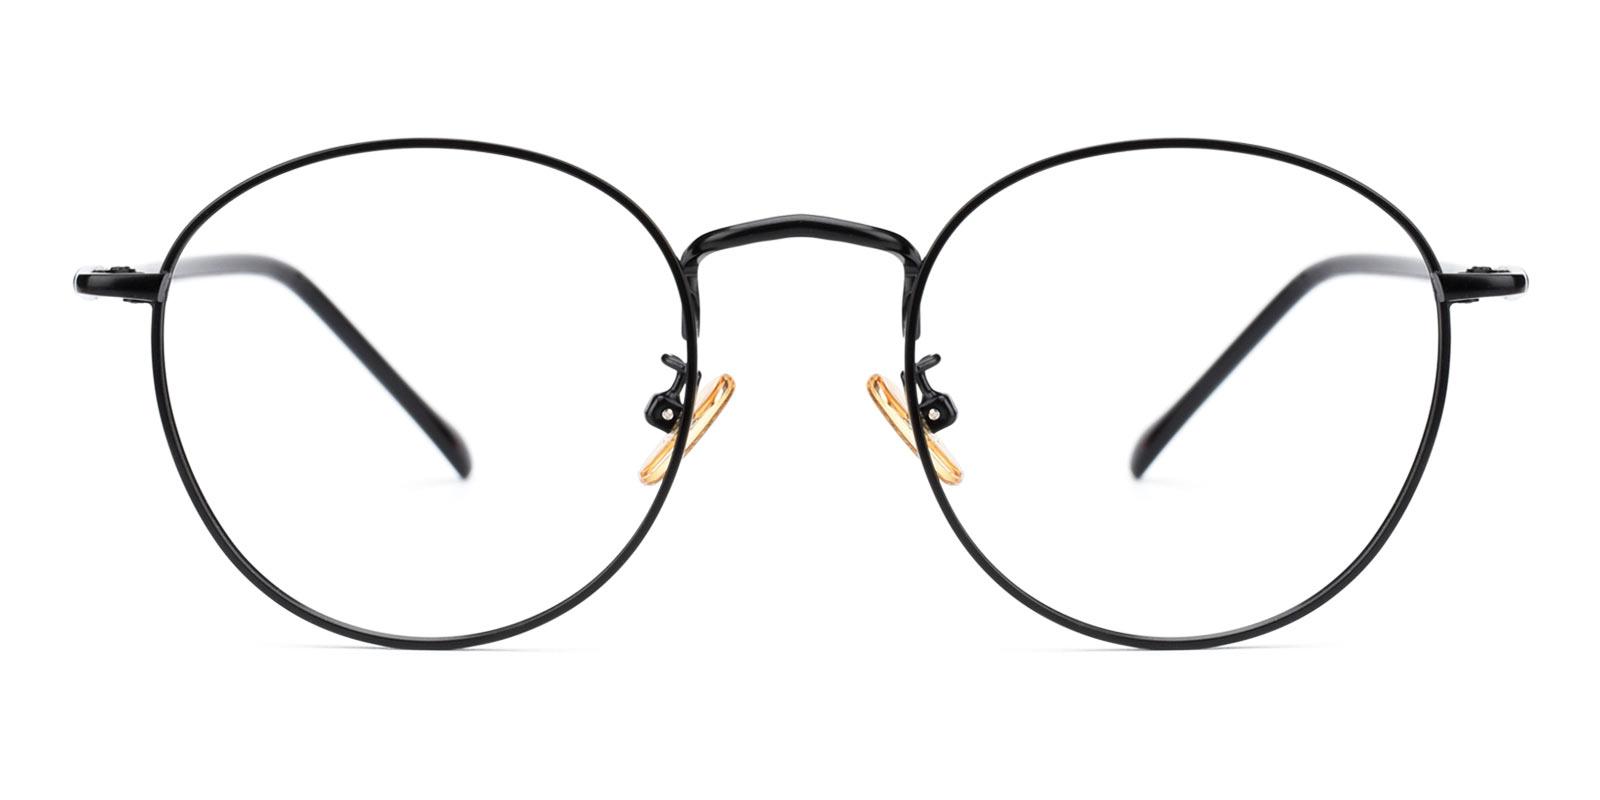 Donuts-Black-Round-Metal-Eyeglasses-detail